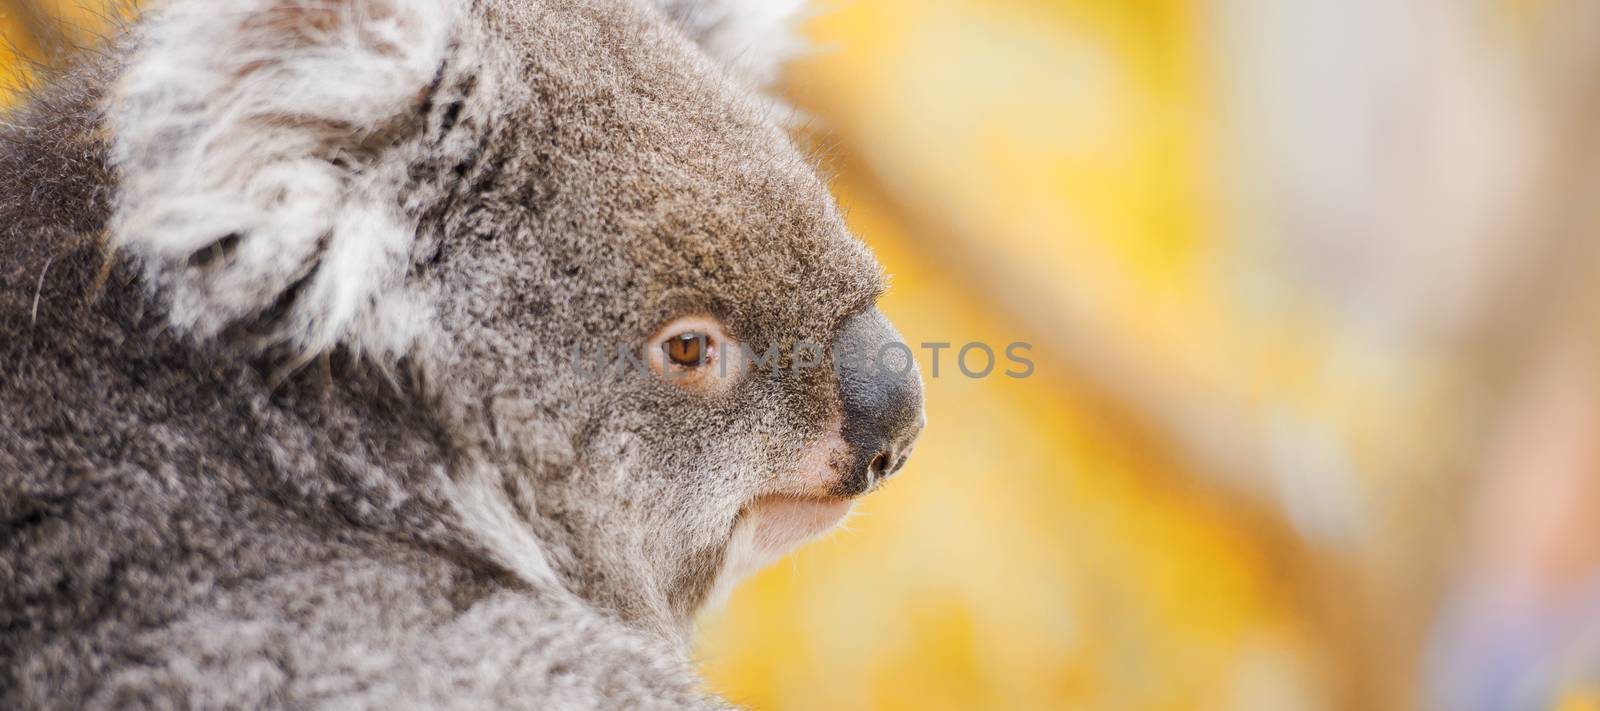 Australian koala outdoors in Tasmania, Australia